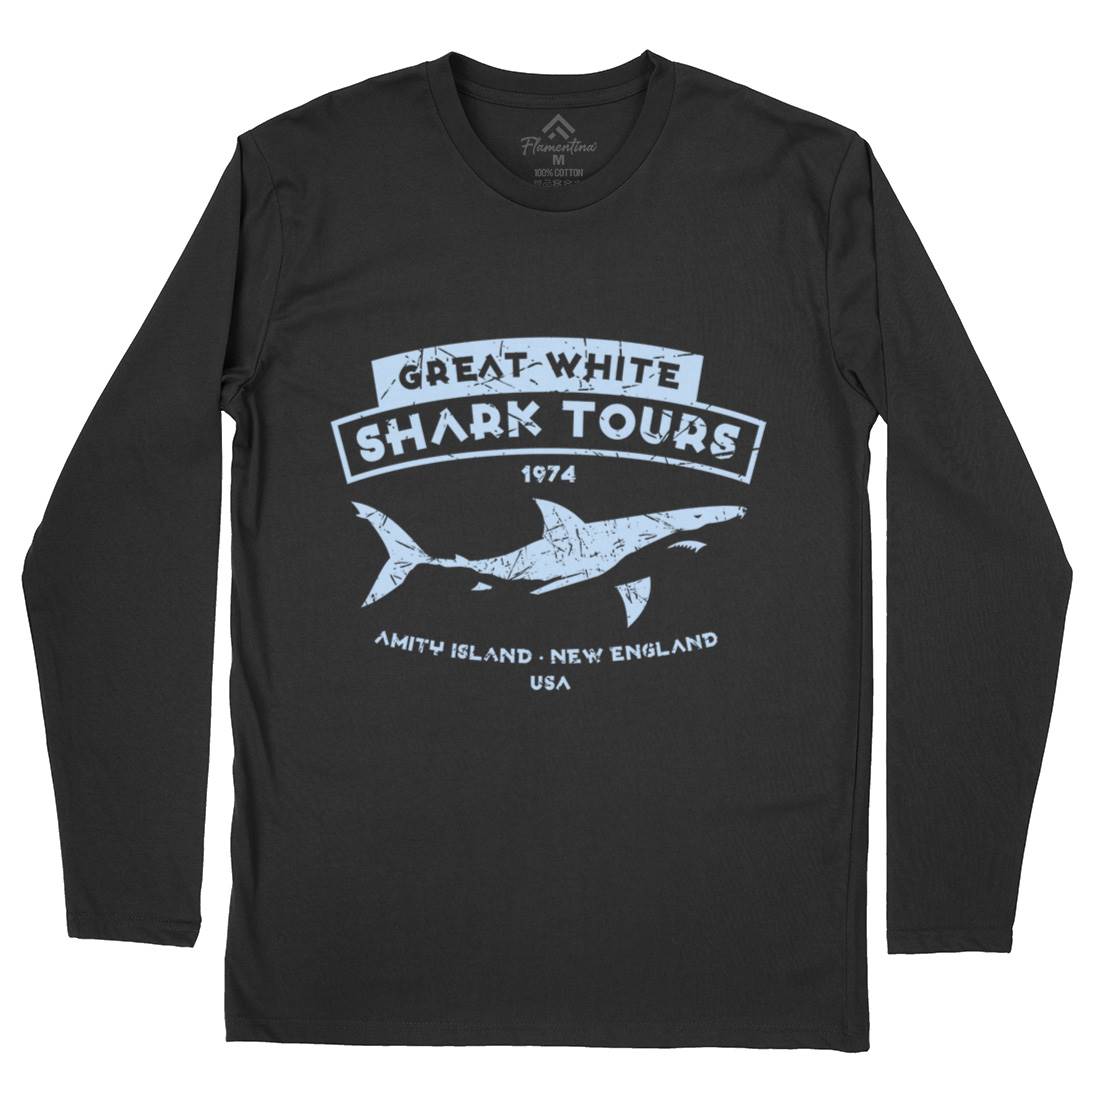 Great White Shark Tours Mens Long Sleeve T-Shirt Navy D348